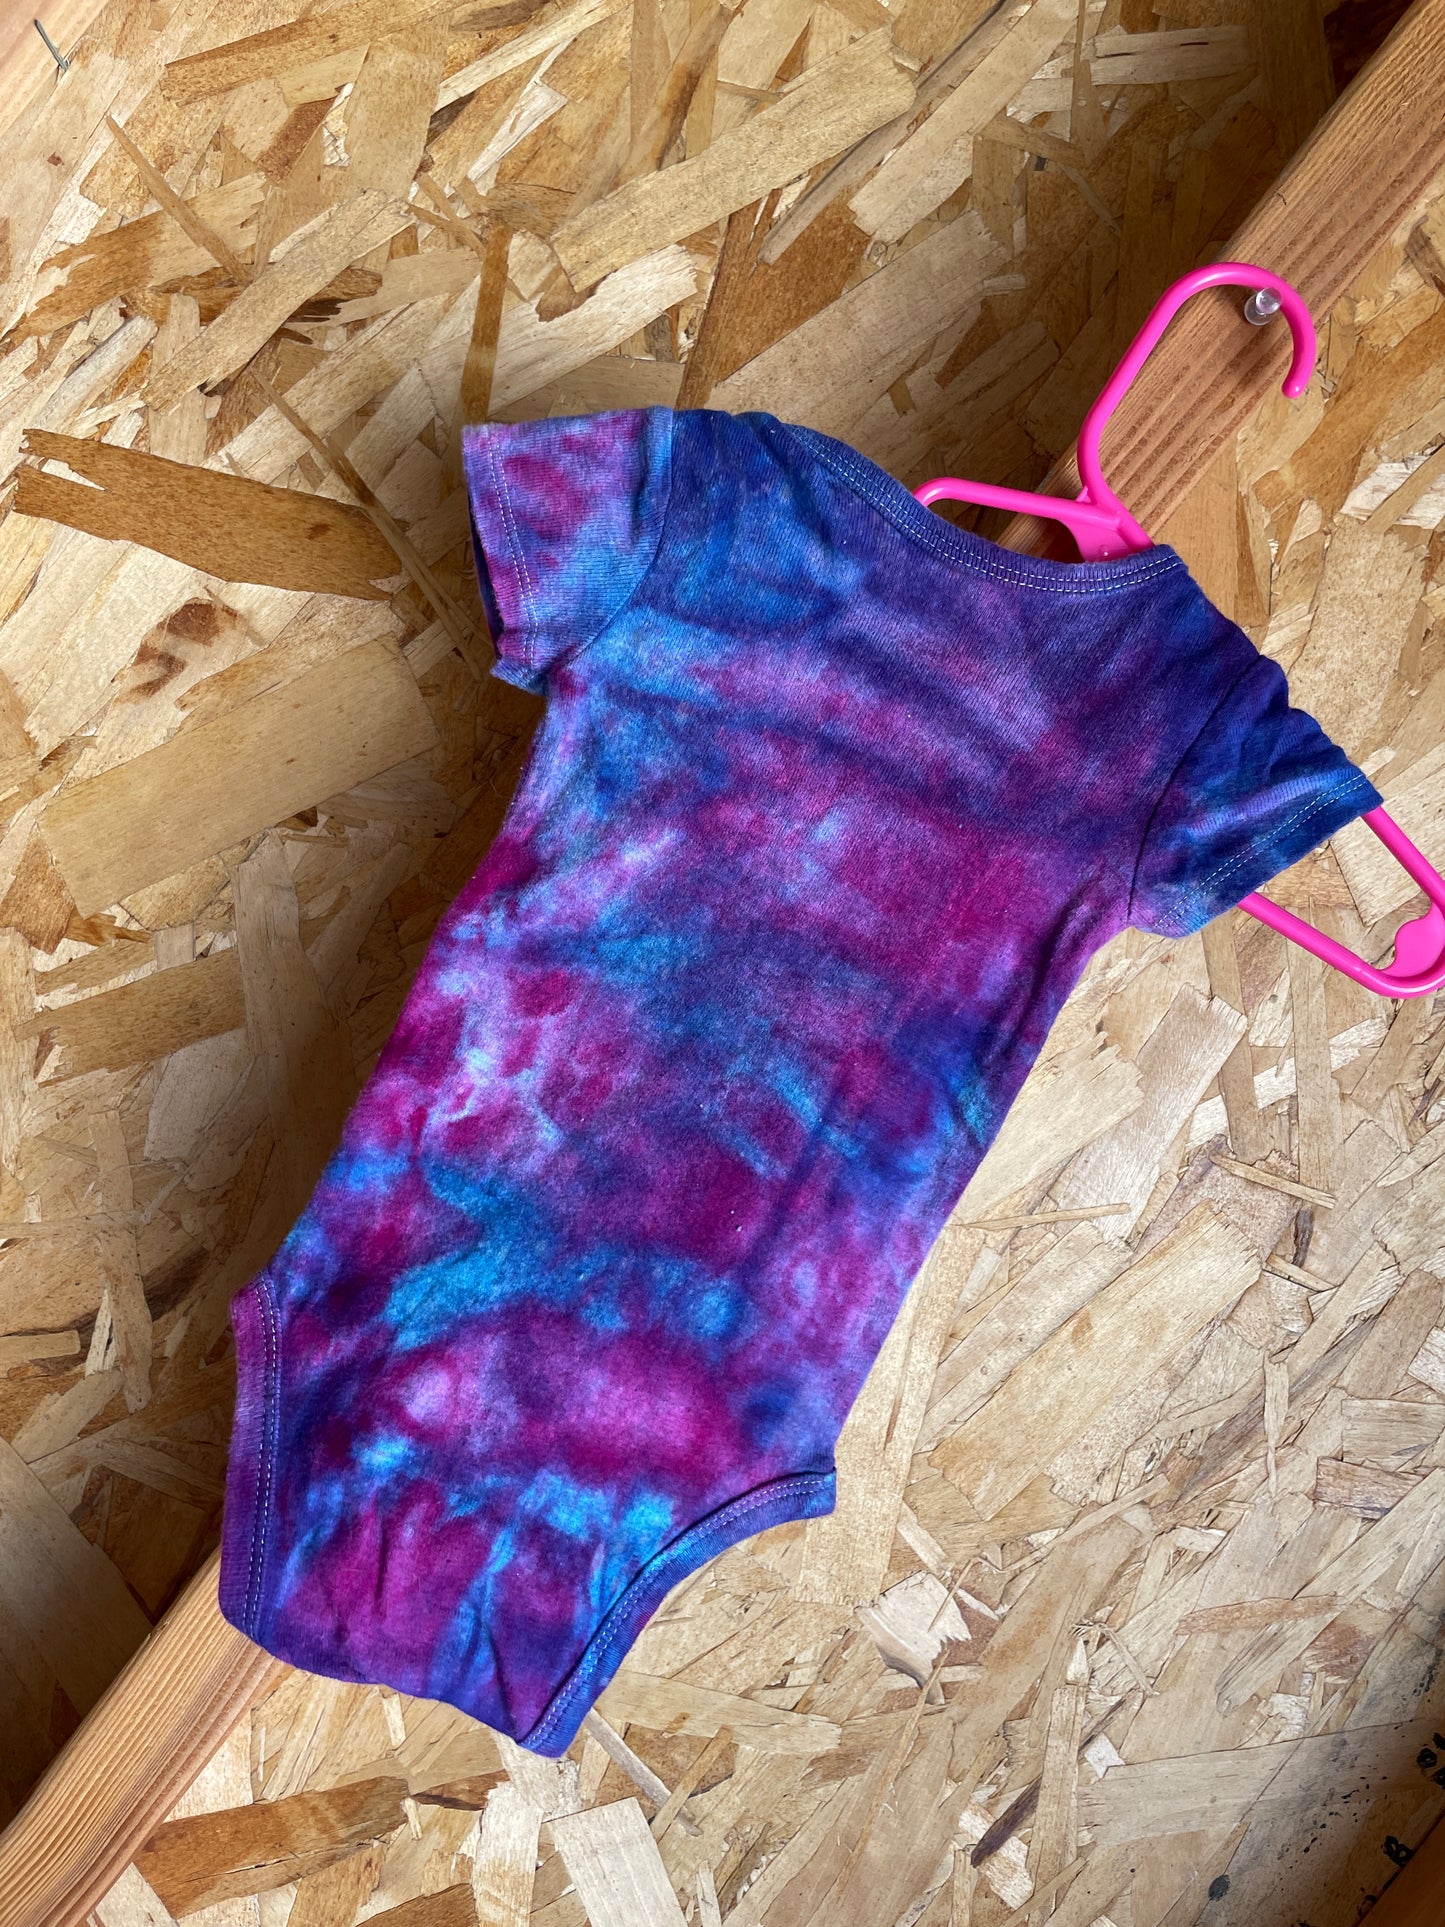 3-6 MONTHS Short Sleeve Baby Onesie | Handmade Tie Dye Cotton Onesie | Galaxy Ice Dyed Baby clothing